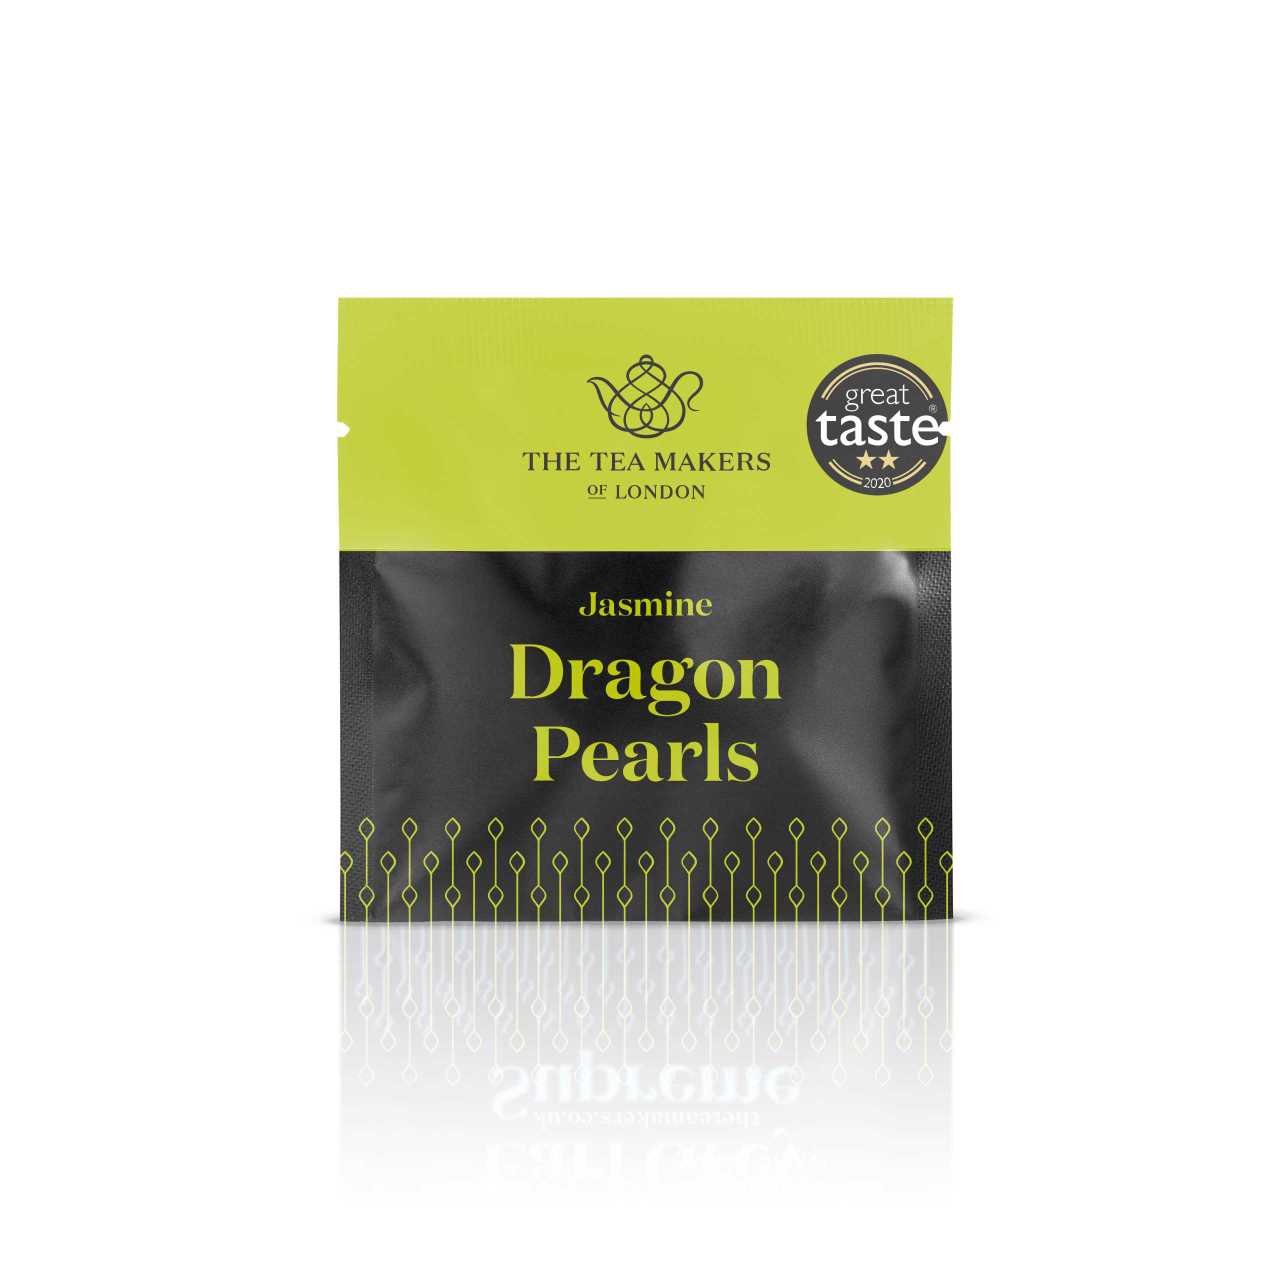 Jasmine Dragon Pearls Teabag Envelope